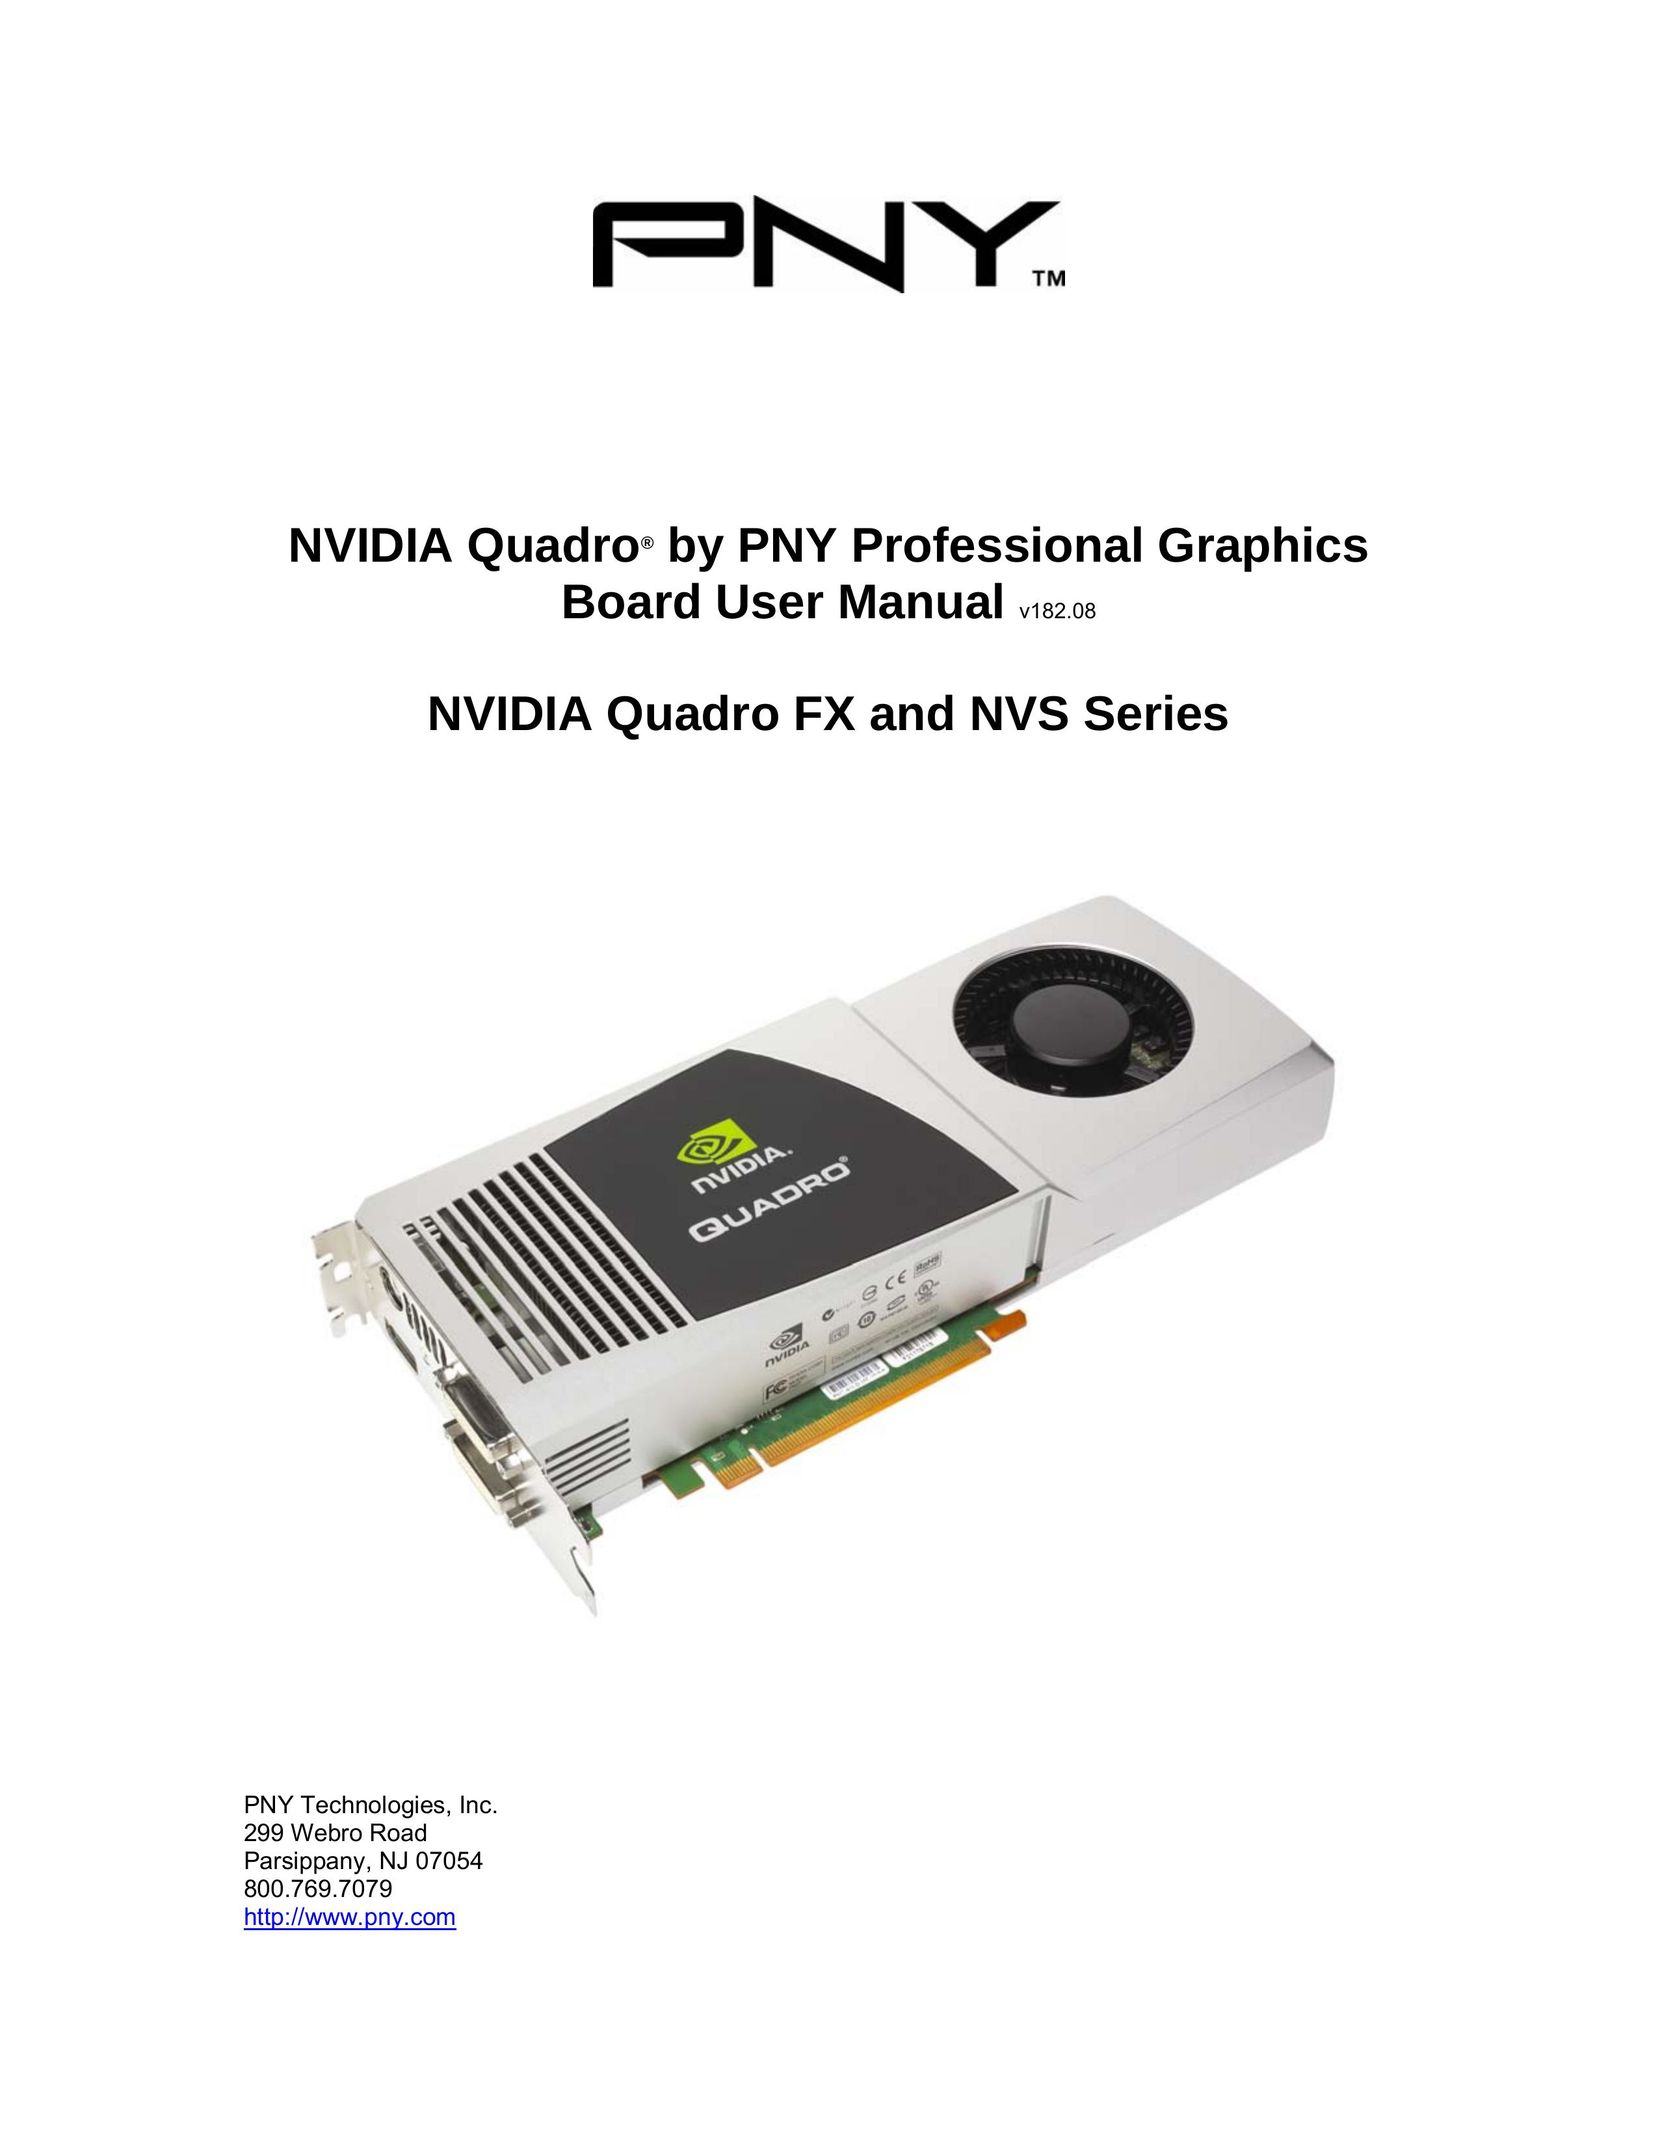 PNY FX 5800 SDI Computer Hardware User Manual